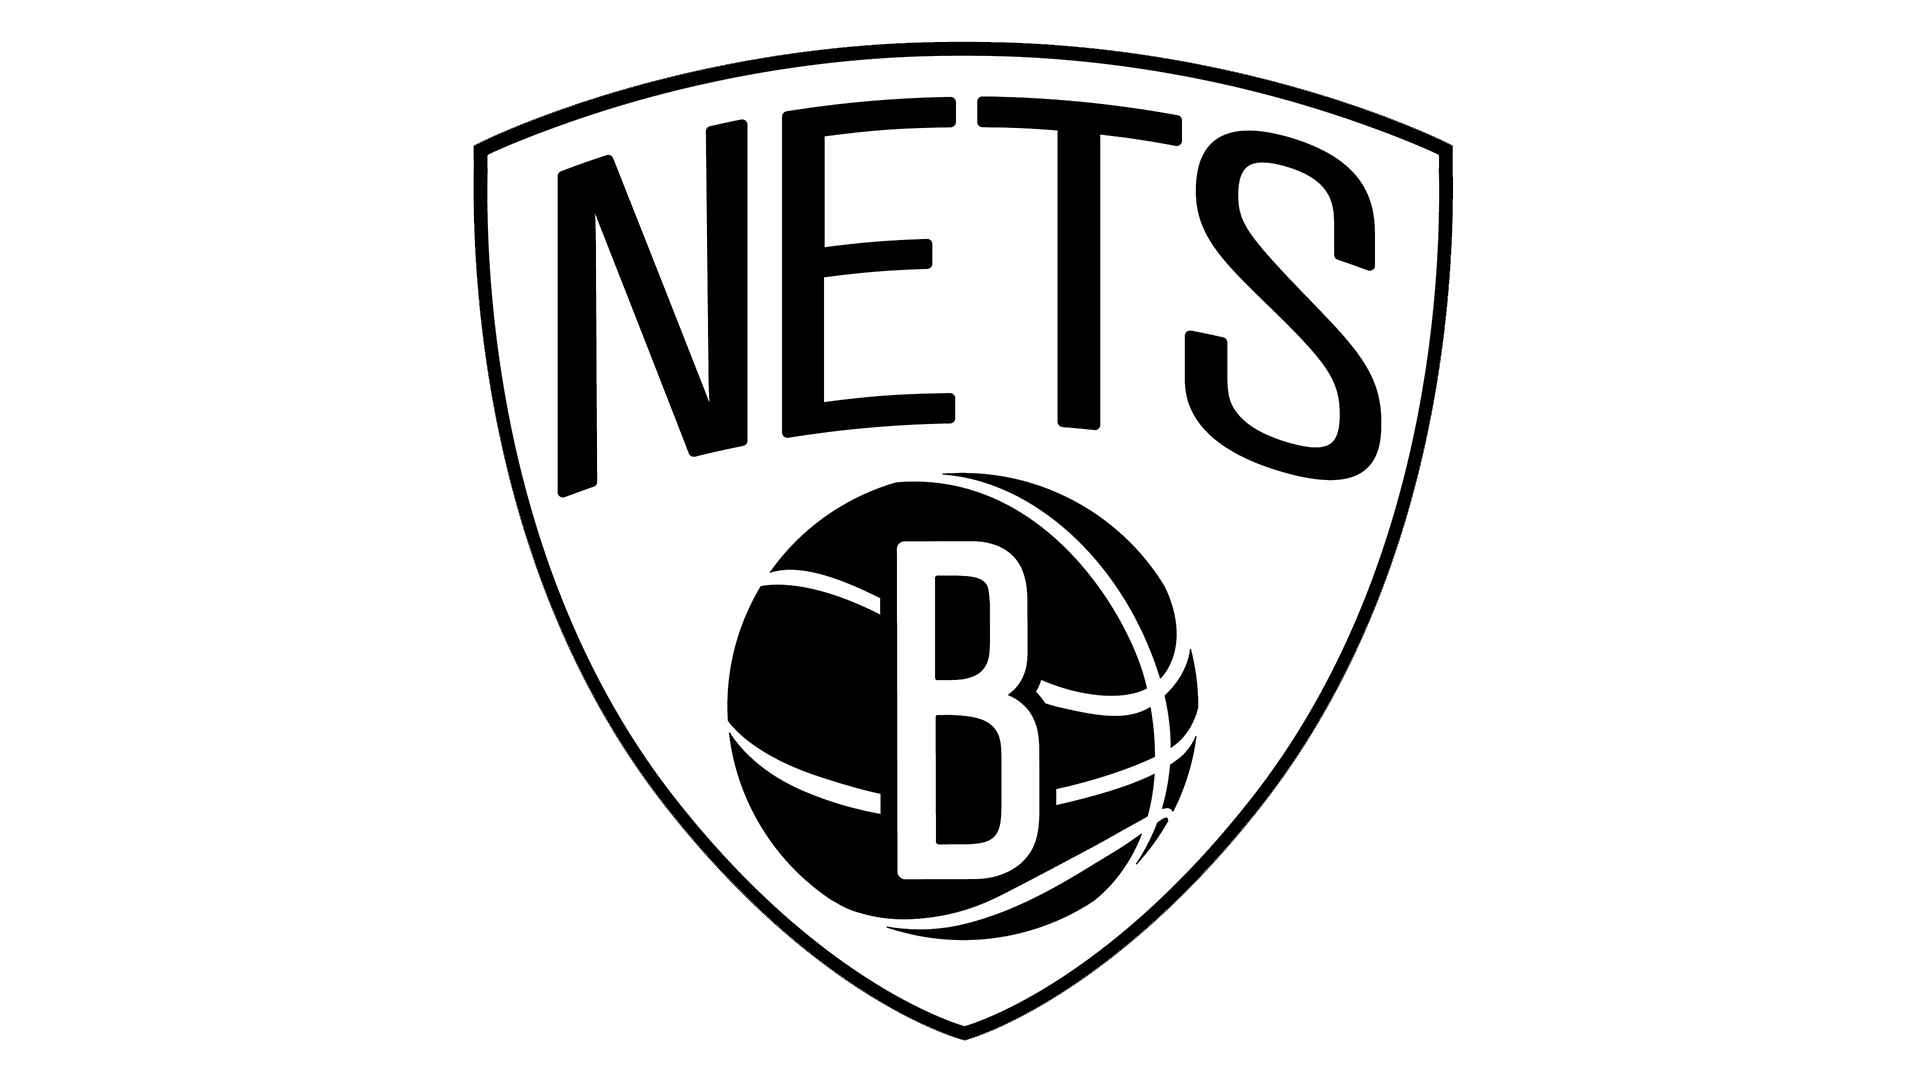 Nets Logo PNG Image